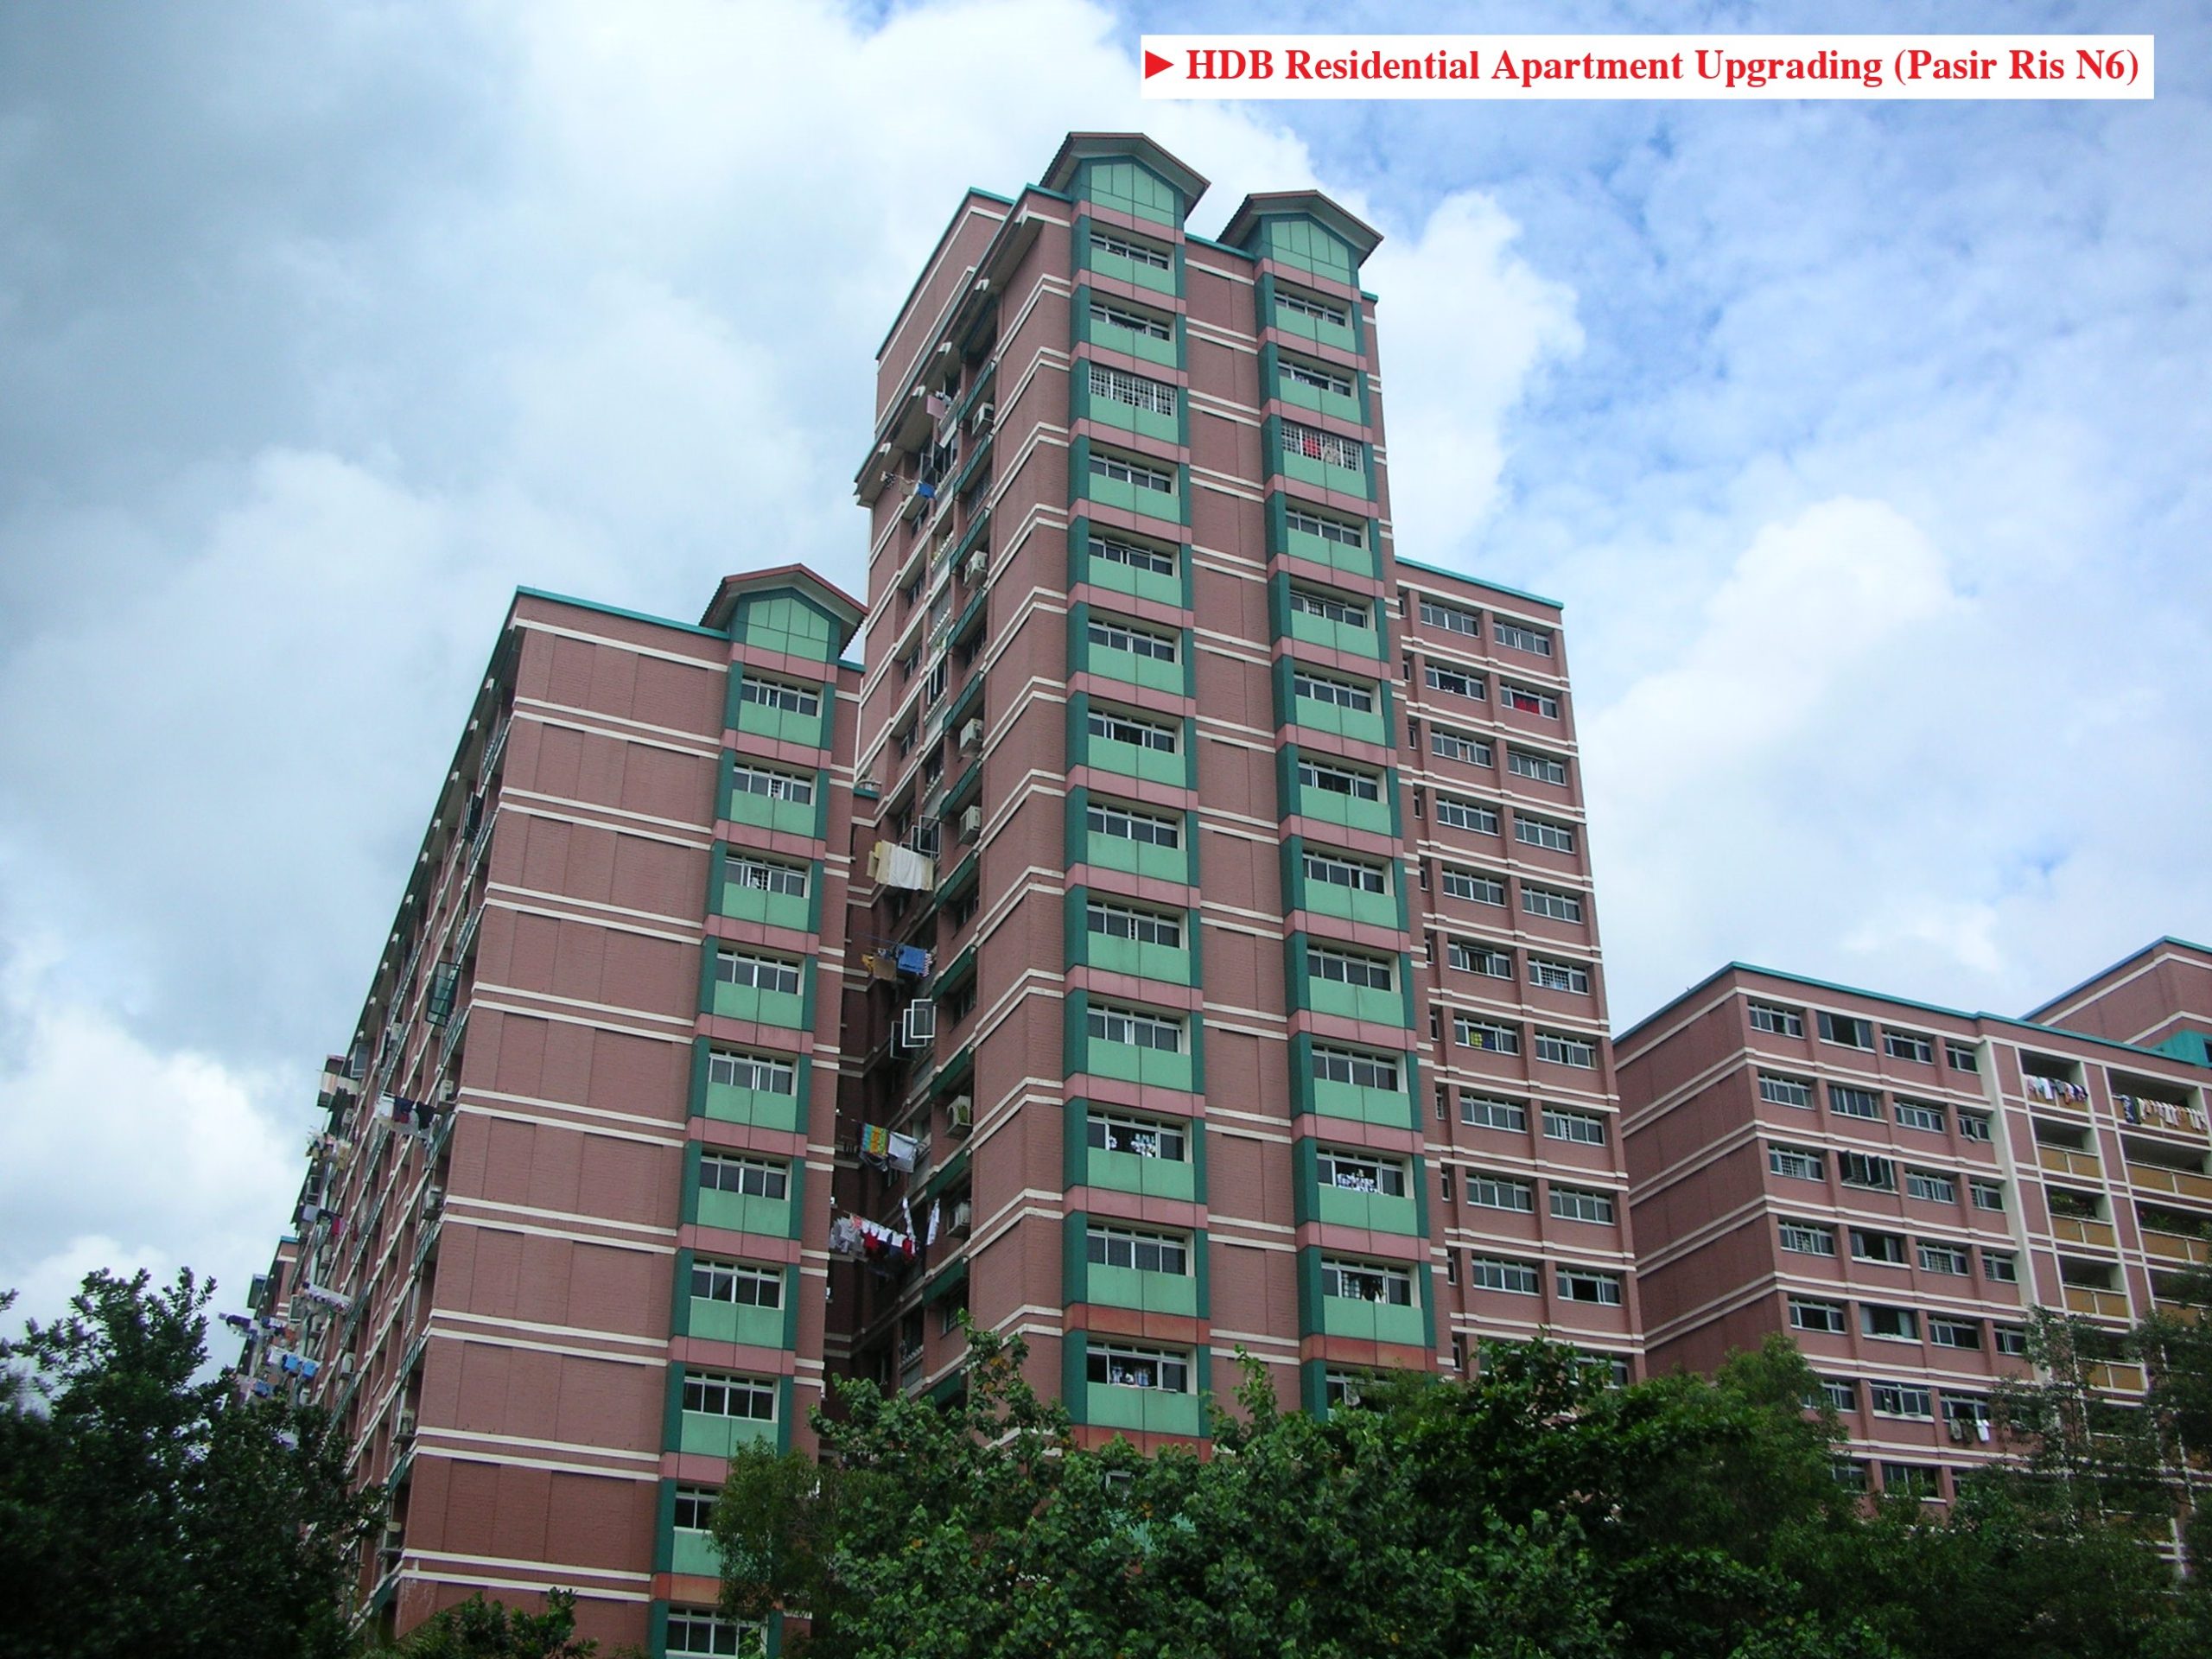 HDB Residential Apartment Upgrading (Pasir Ris N6)